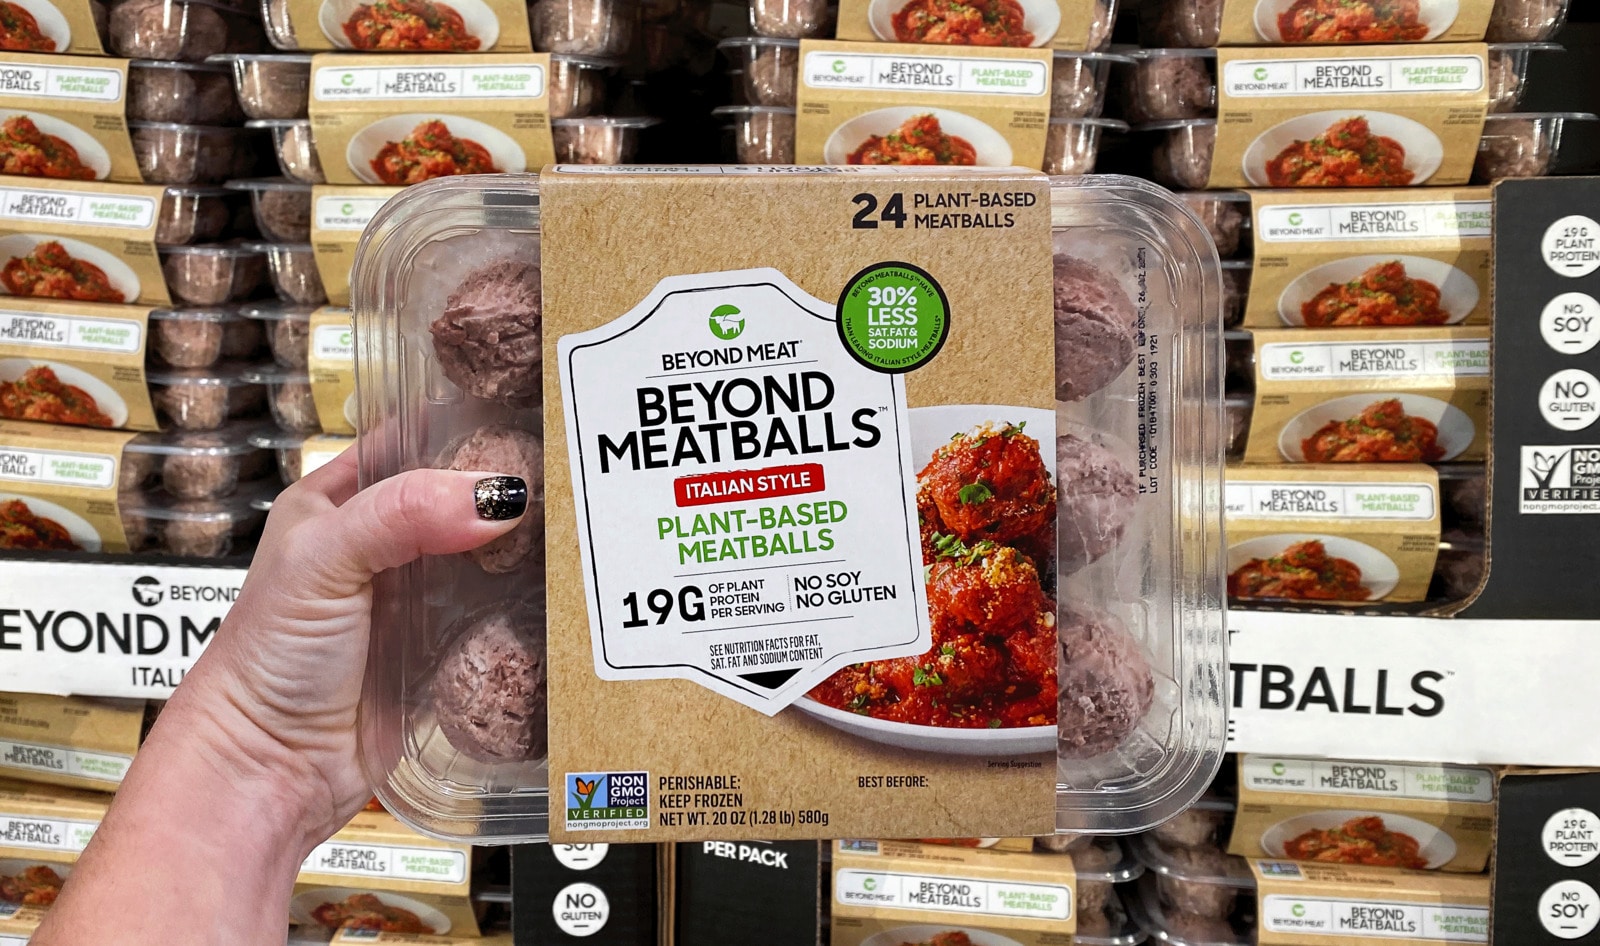 Vegan Beyond Meatballs Launch at Costco